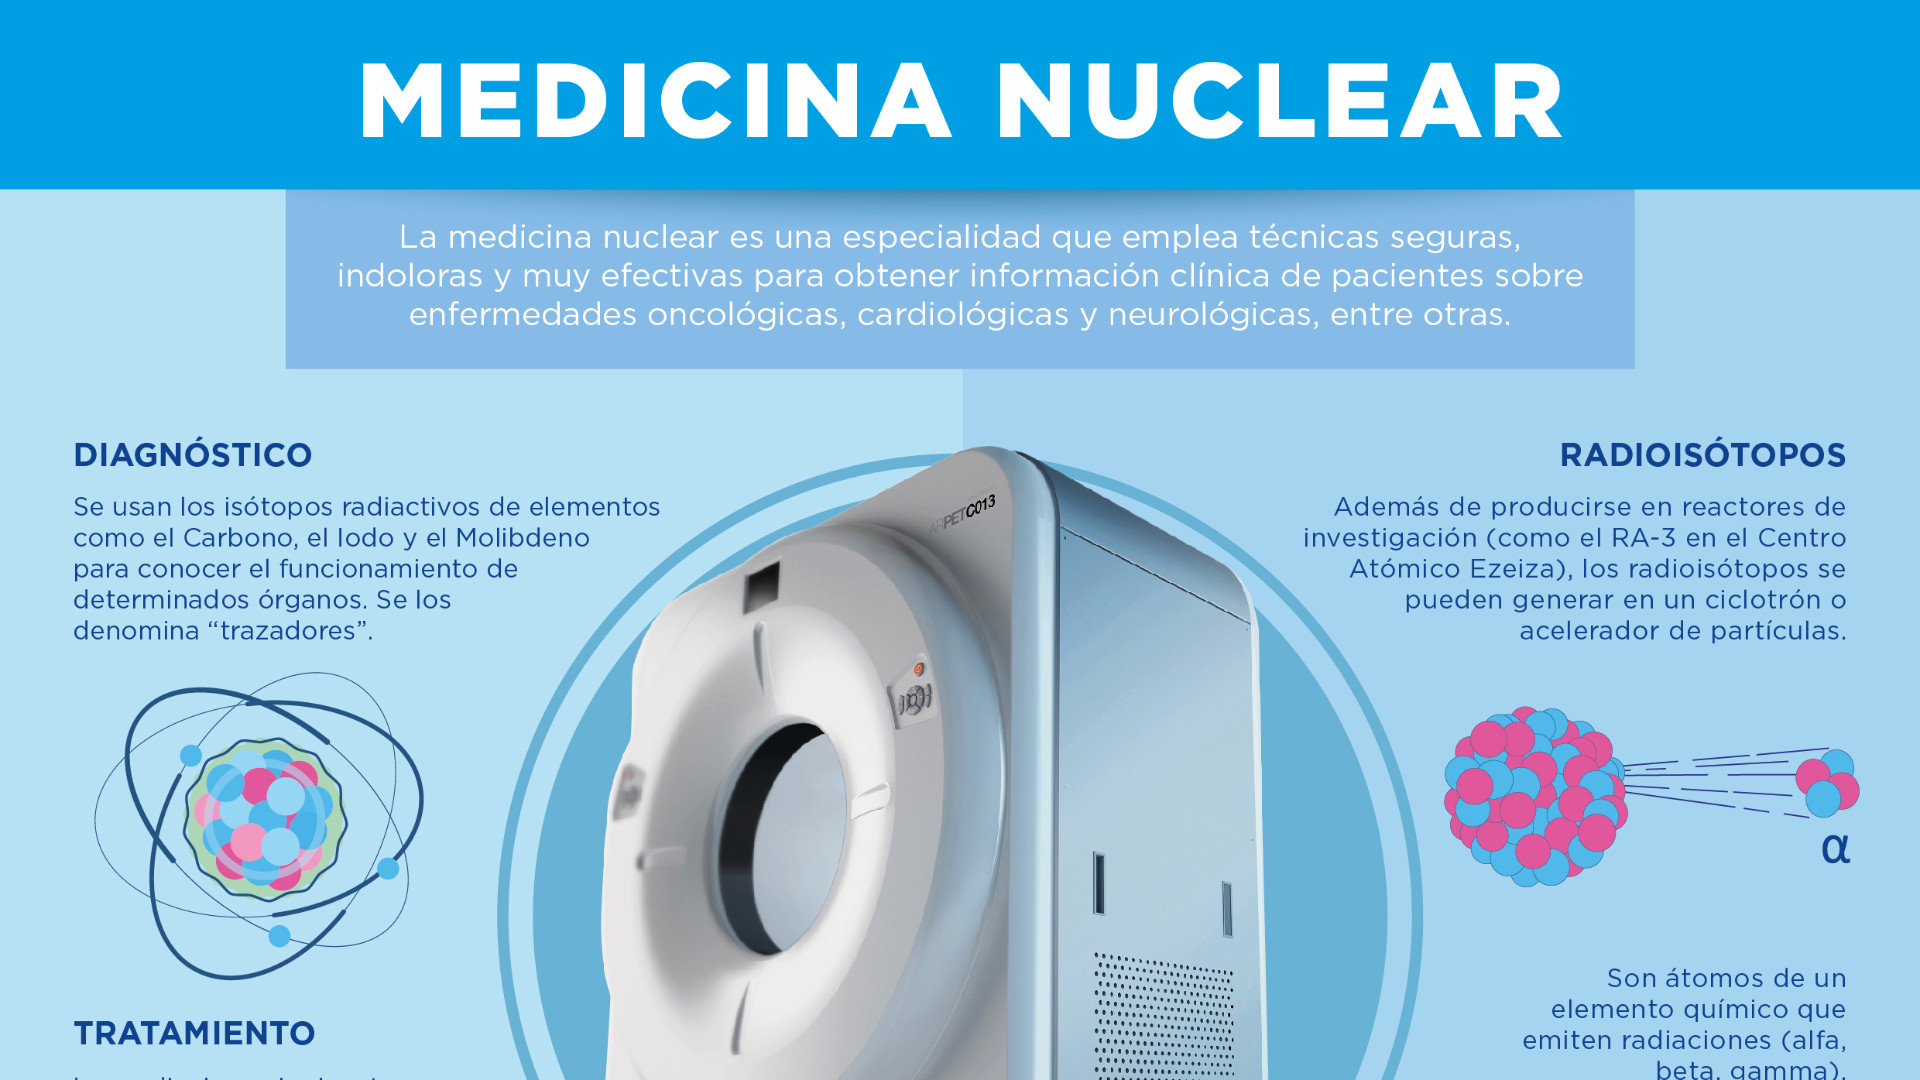 Lamina educativa sobre medicina nuclear